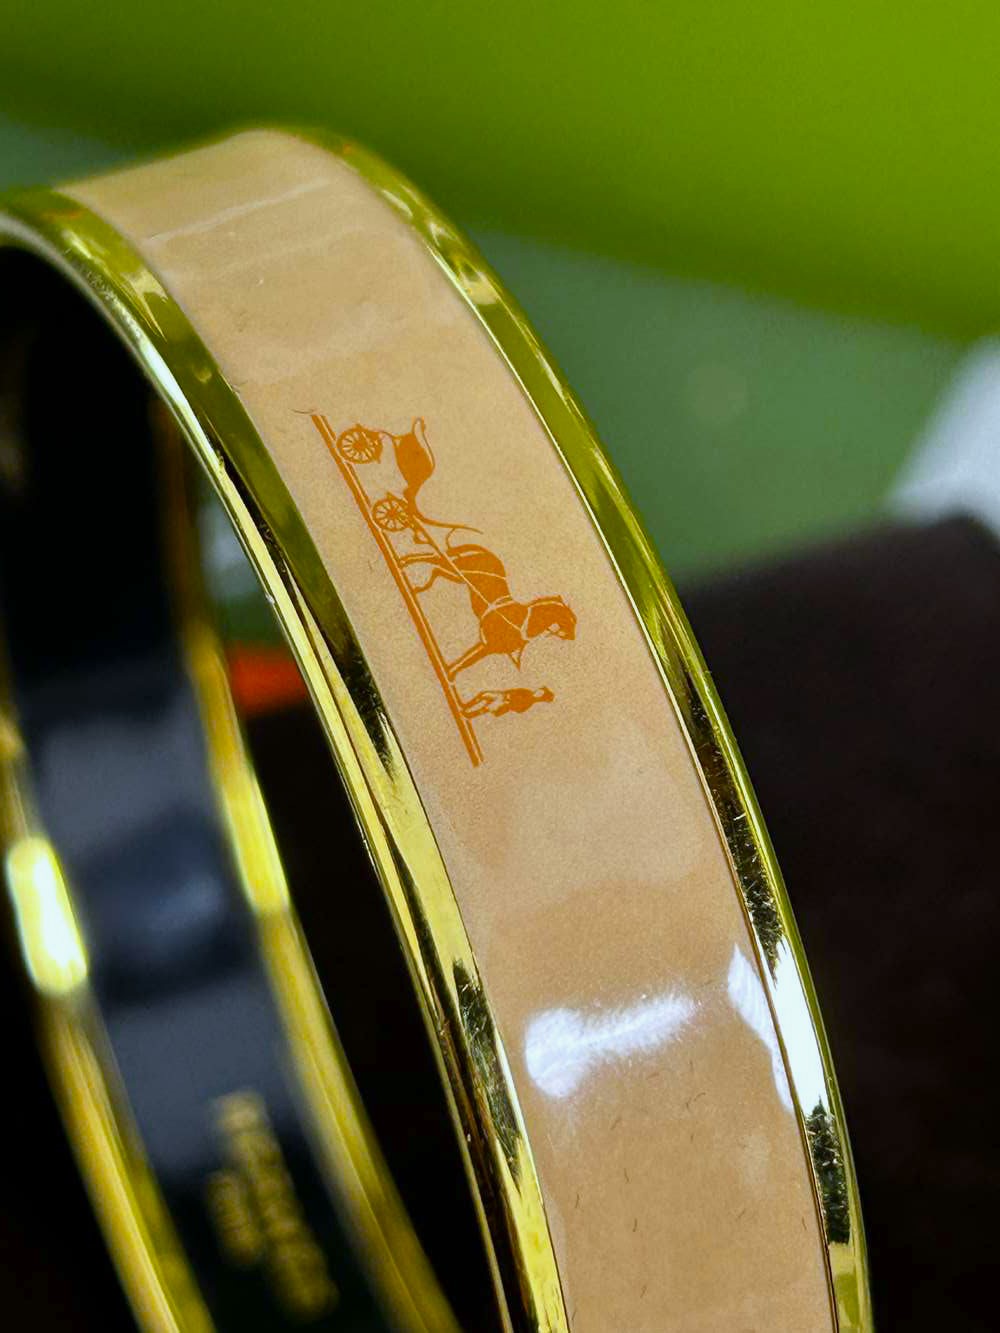 SOLD VIA BUY IT NOW-PLEASE DO NOT BID-Hermes Paris Classic Enamel Monogram Crme Bracelet - Image 7 of 8